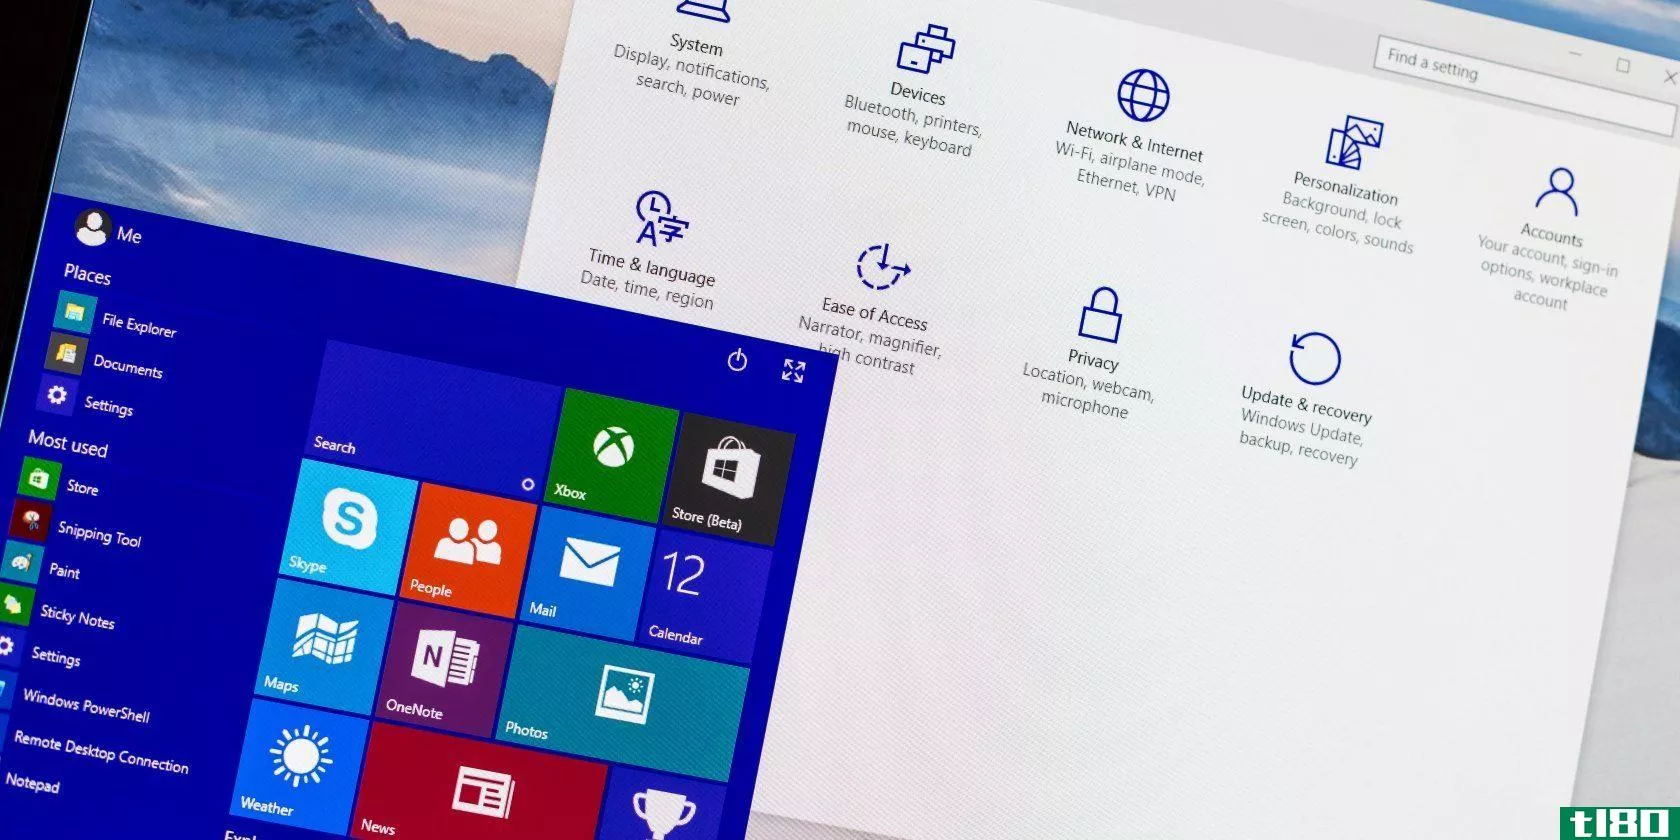 The Windows 10 UI